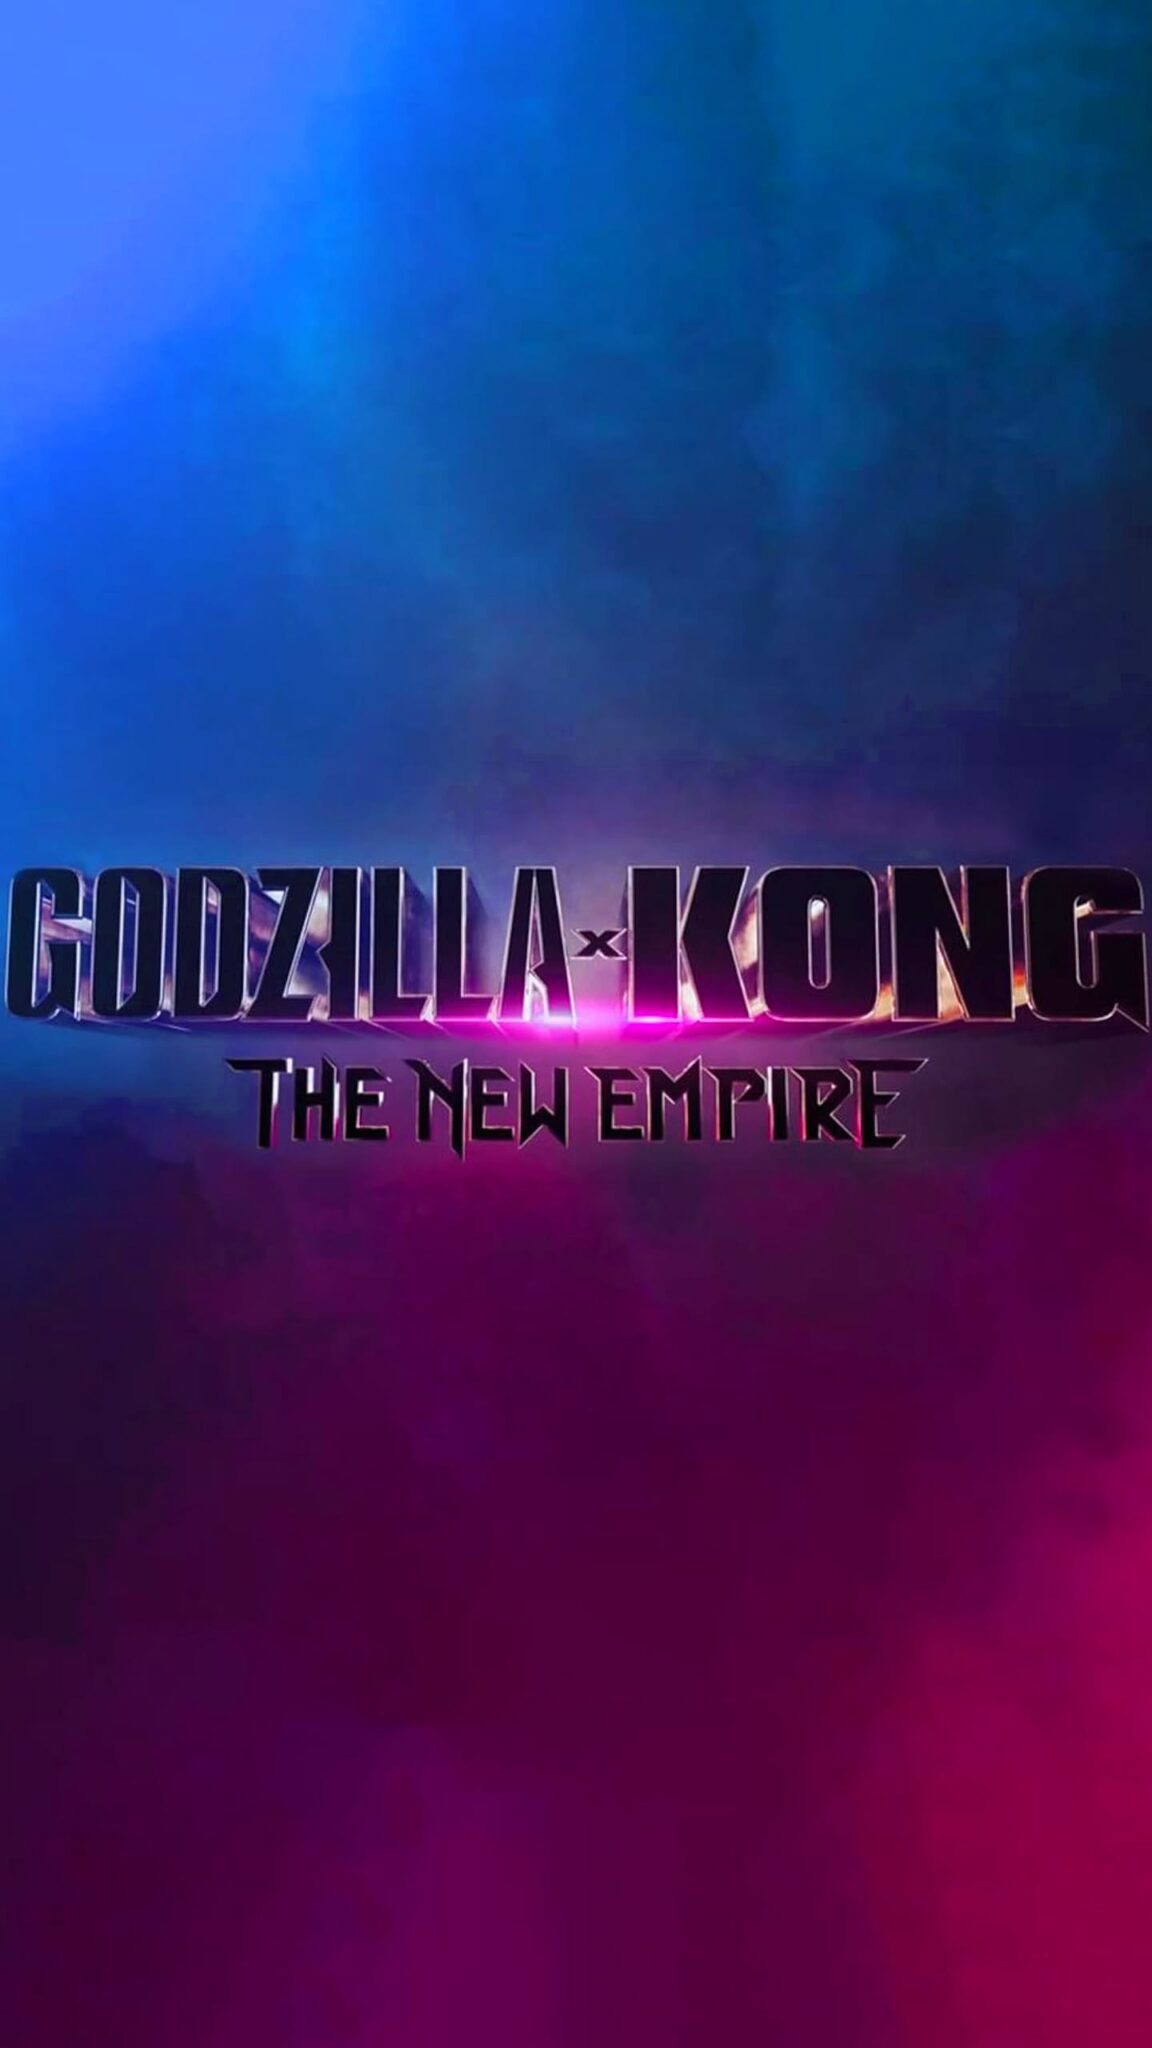 Godzilla x Kong The New Empire Wallpaper - KoLPaPer - Awesome Free HD ...